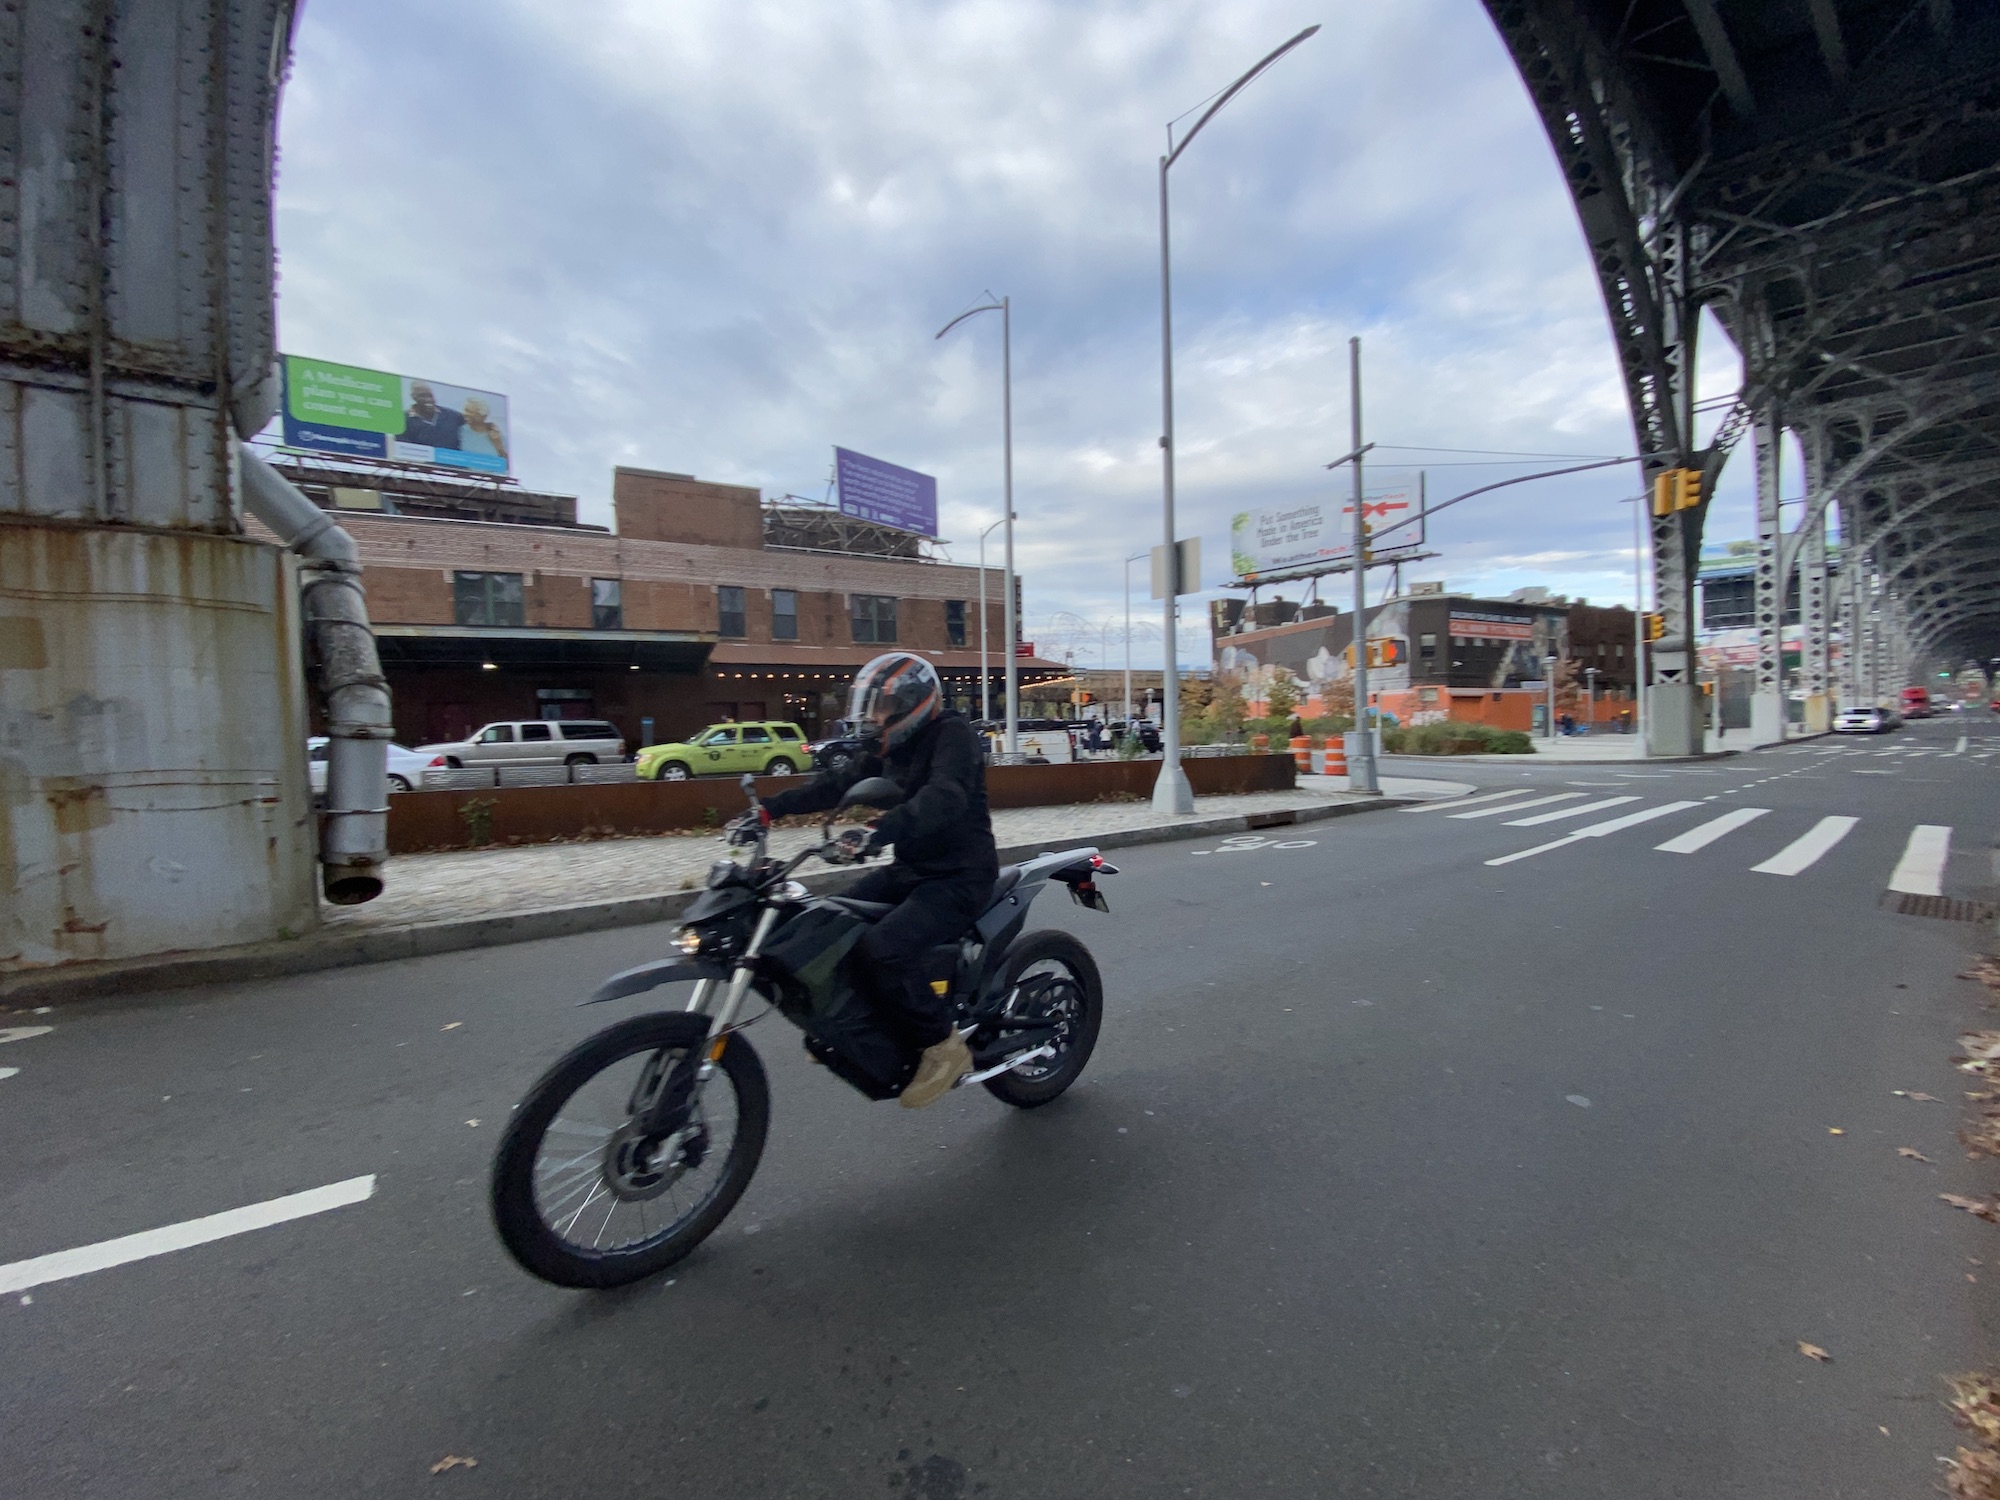 zero dual sport motorcycle